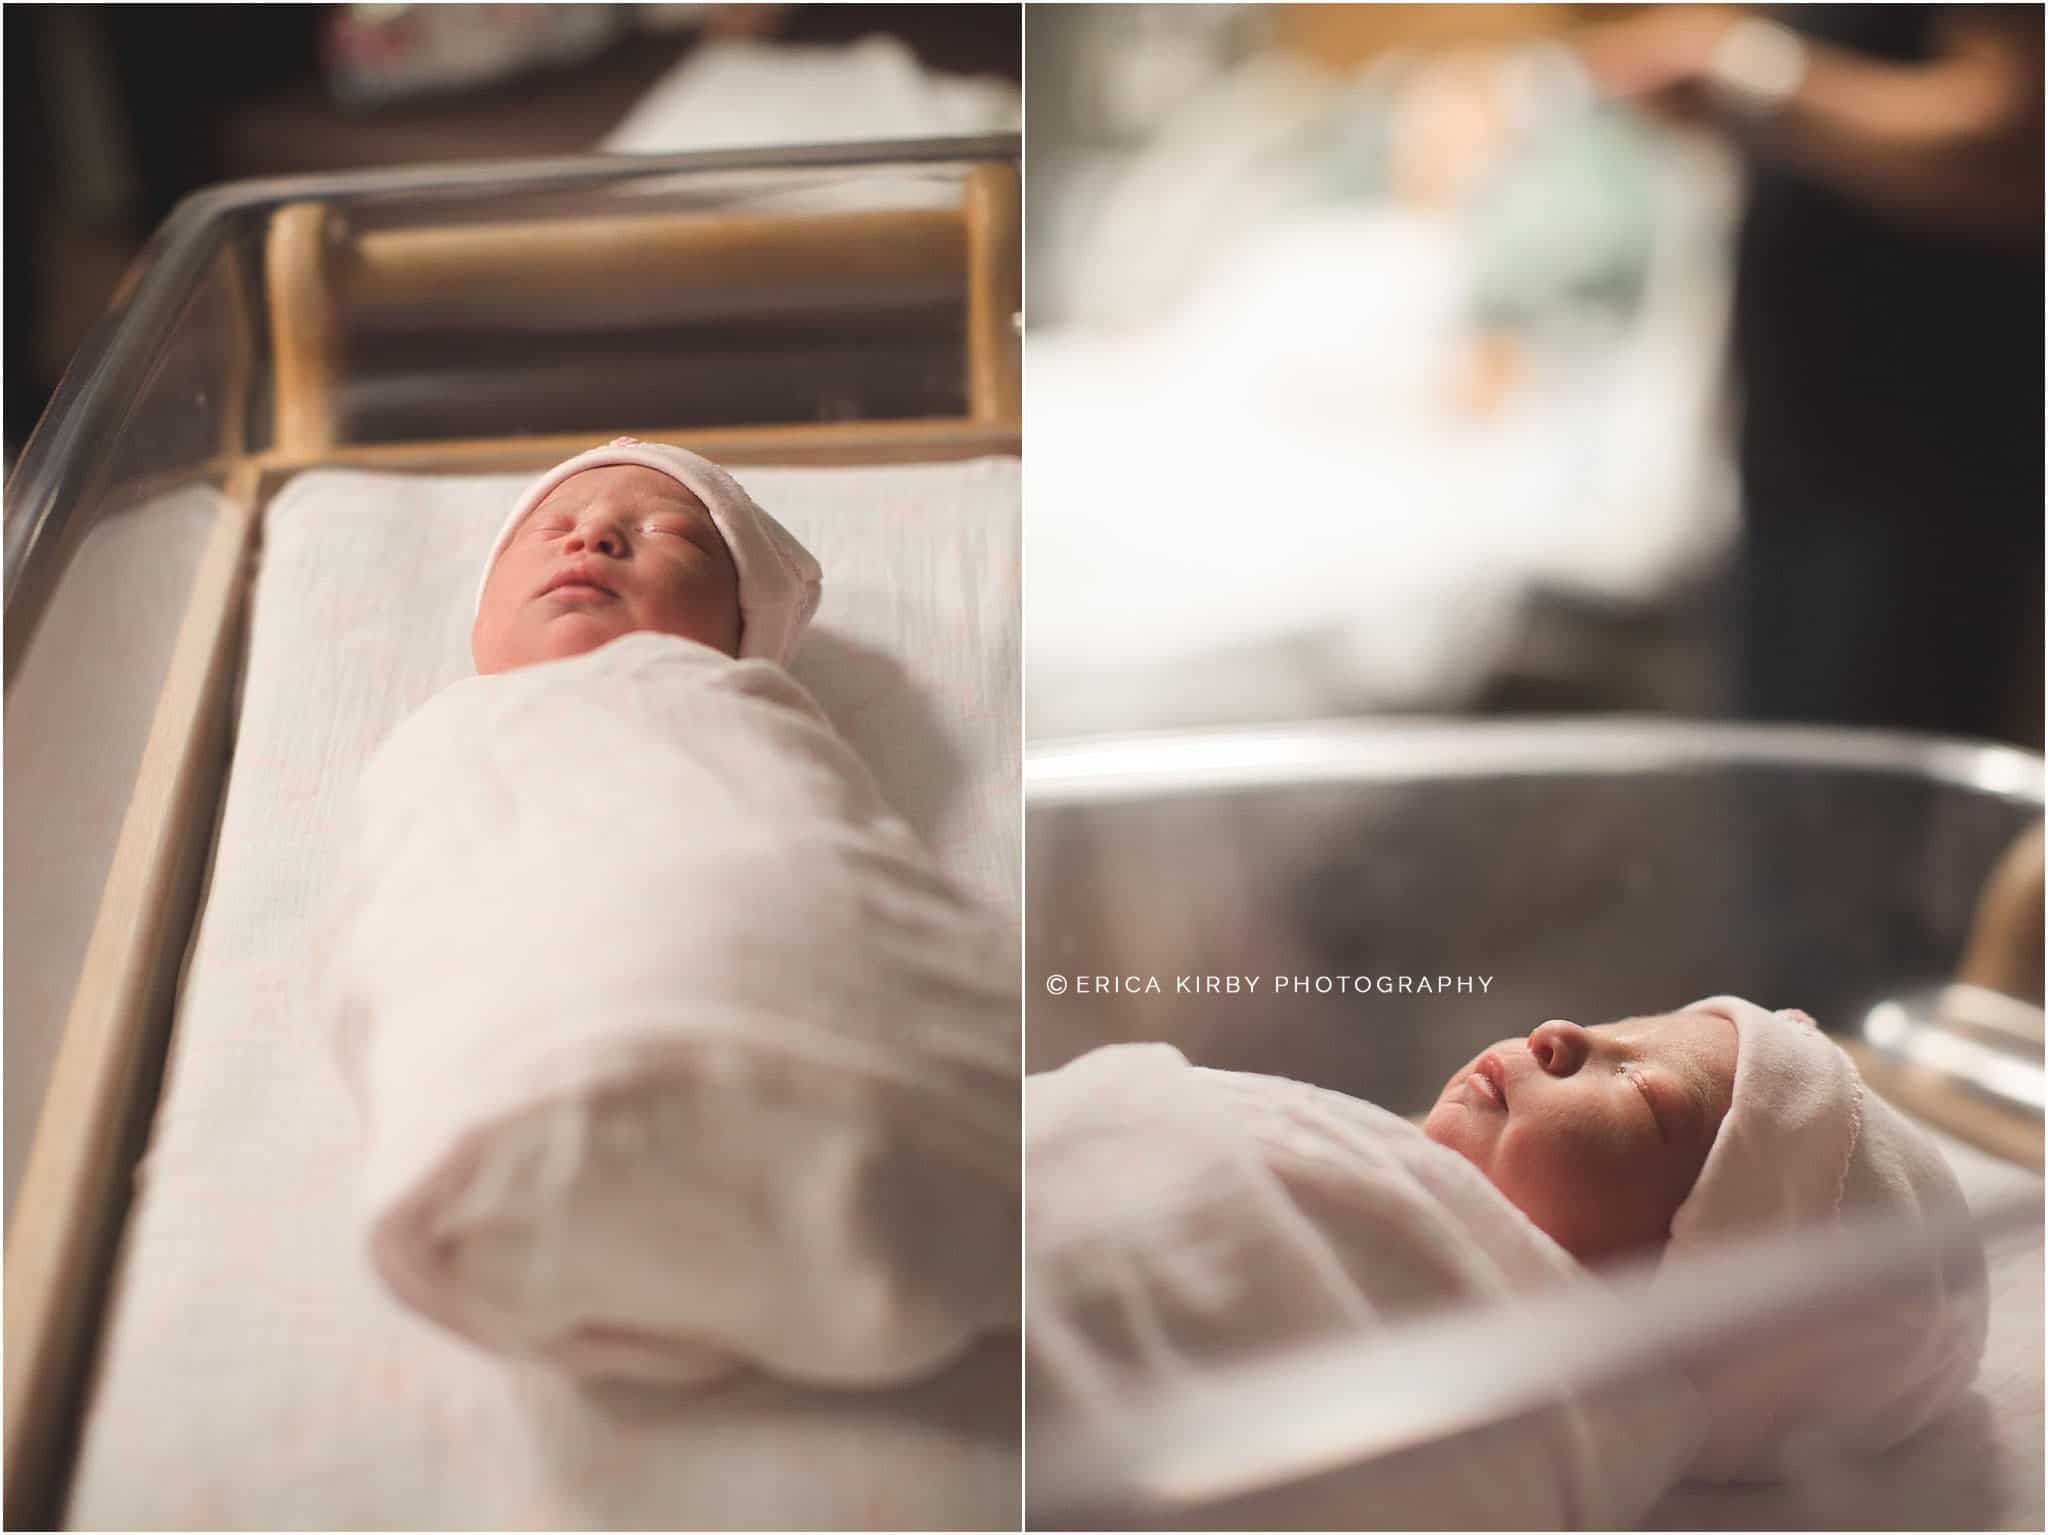 Birth Photographer Northwest Arkansas | Northwest Medical Center Birth Photography Bentonville AR | Erica Kirby Photography